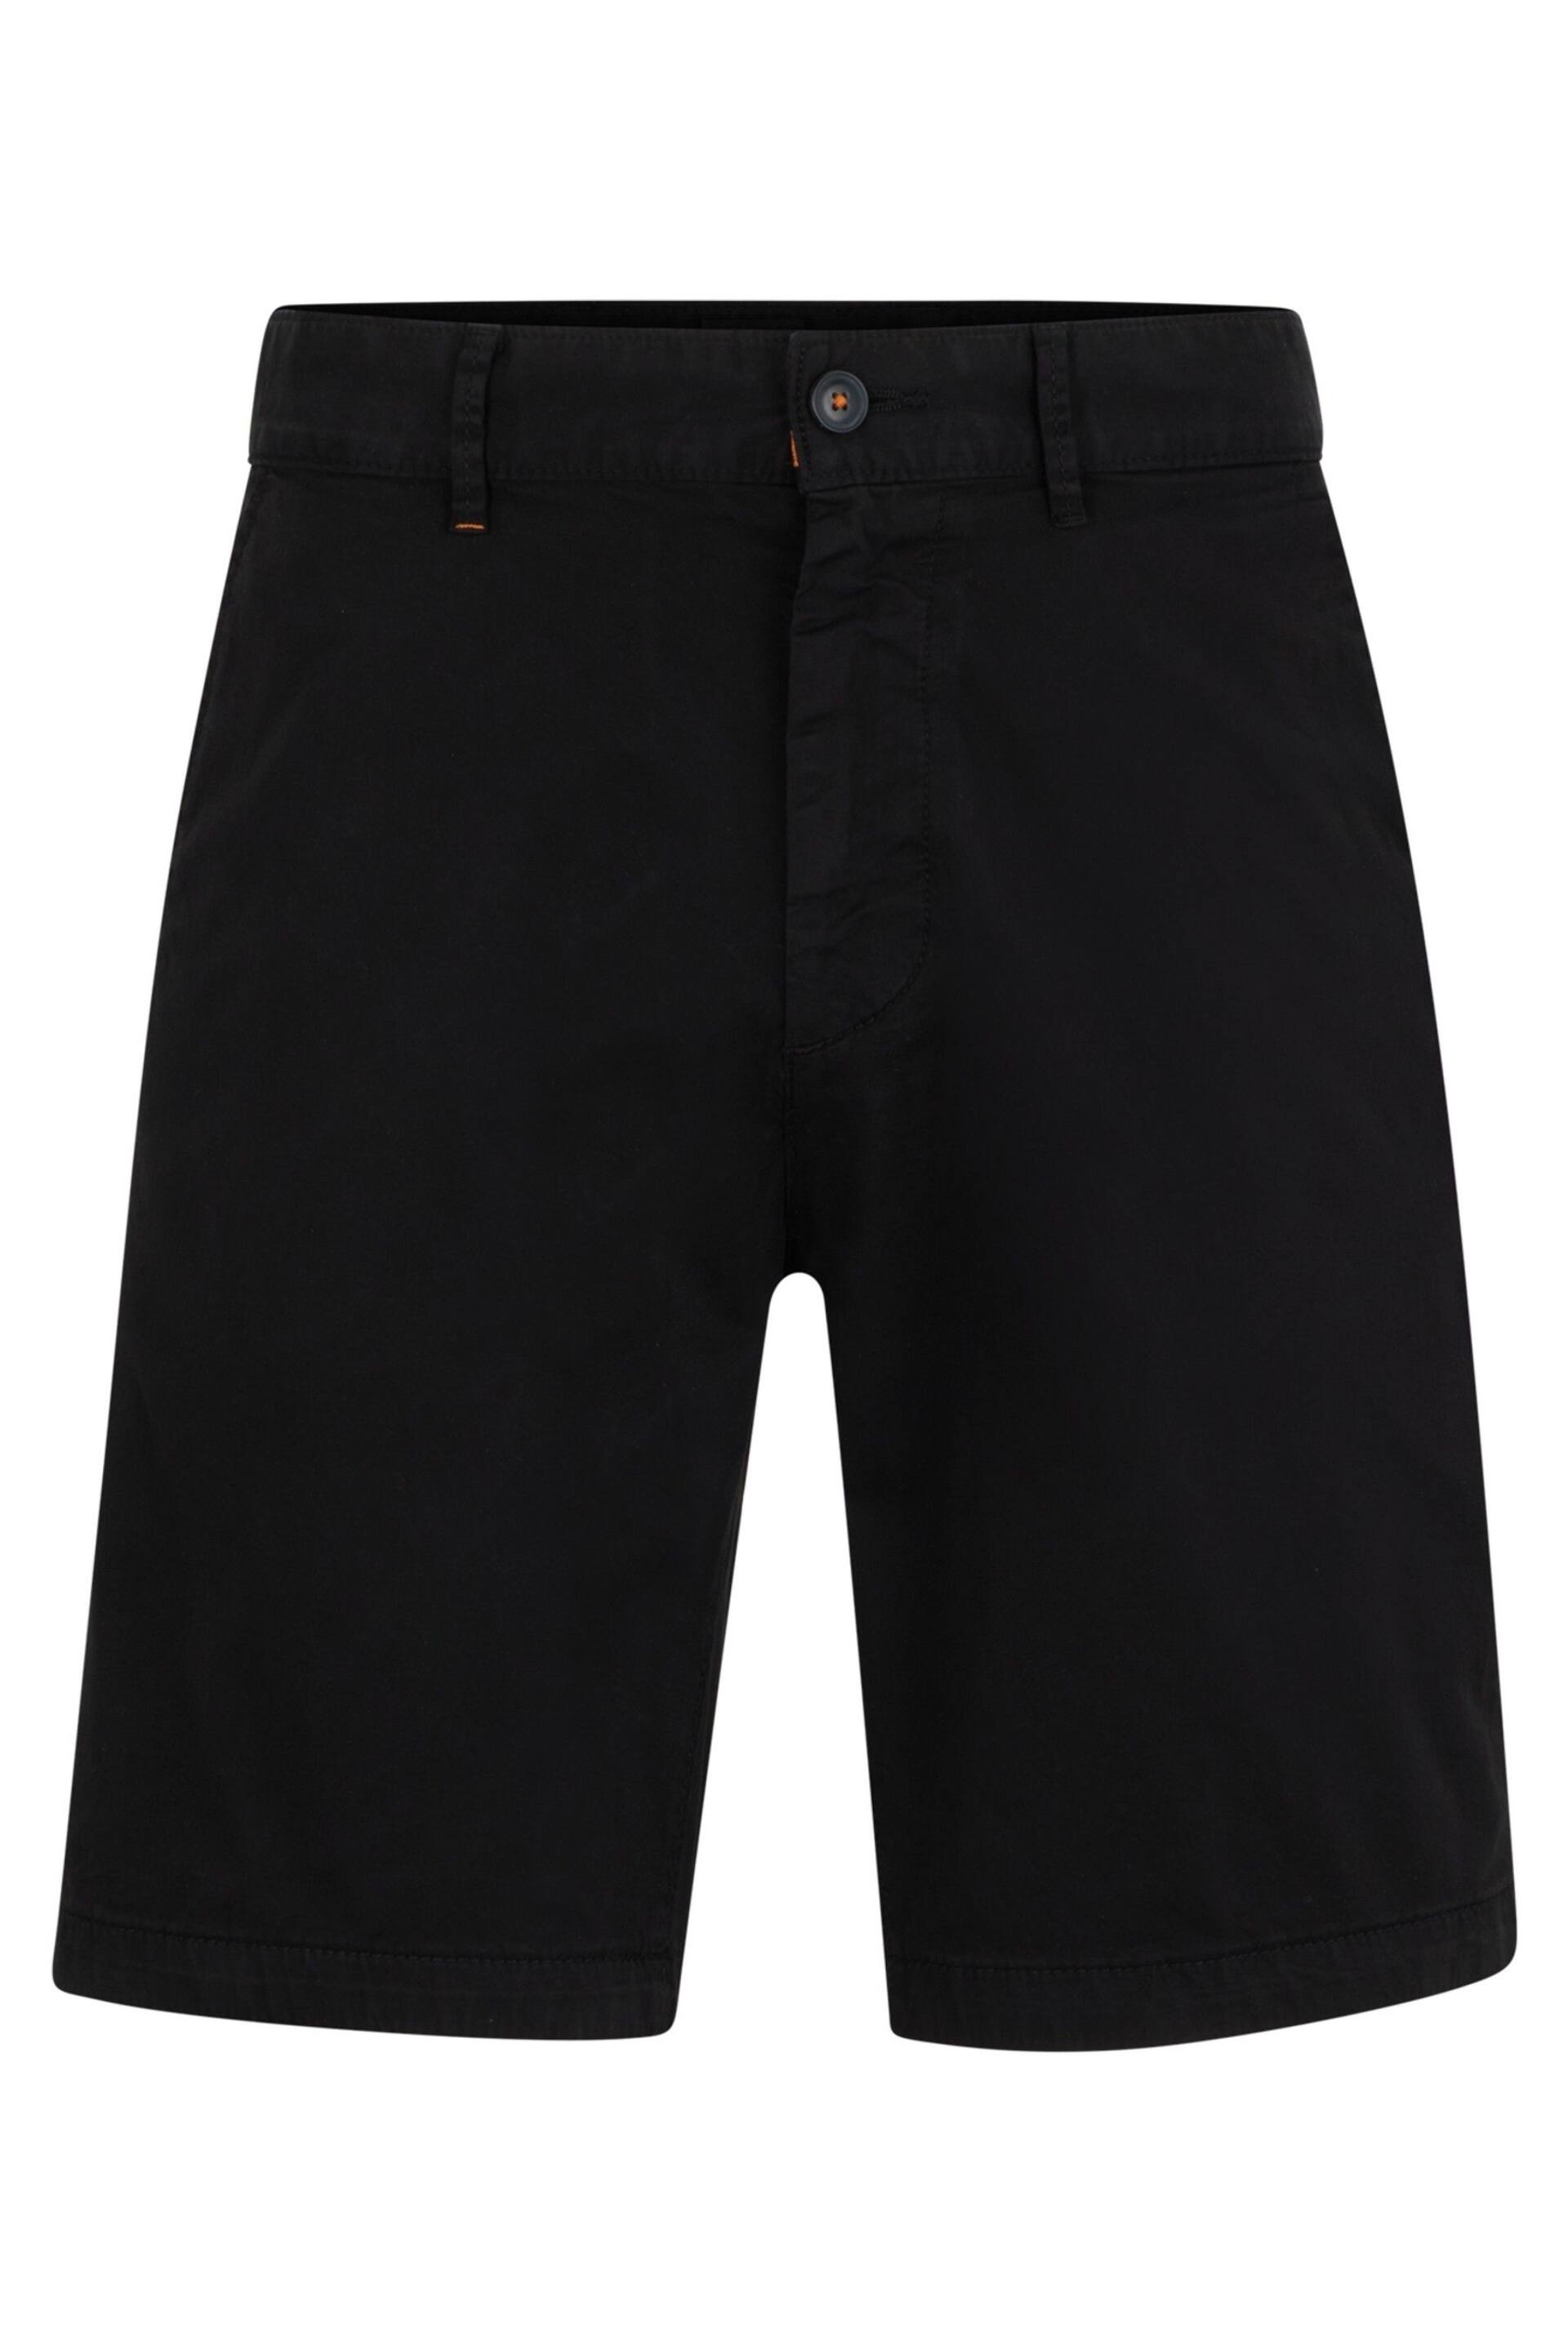 BOSS Black Slim Fit Stretch Cotton Chino Shorts - Image 5 of 5